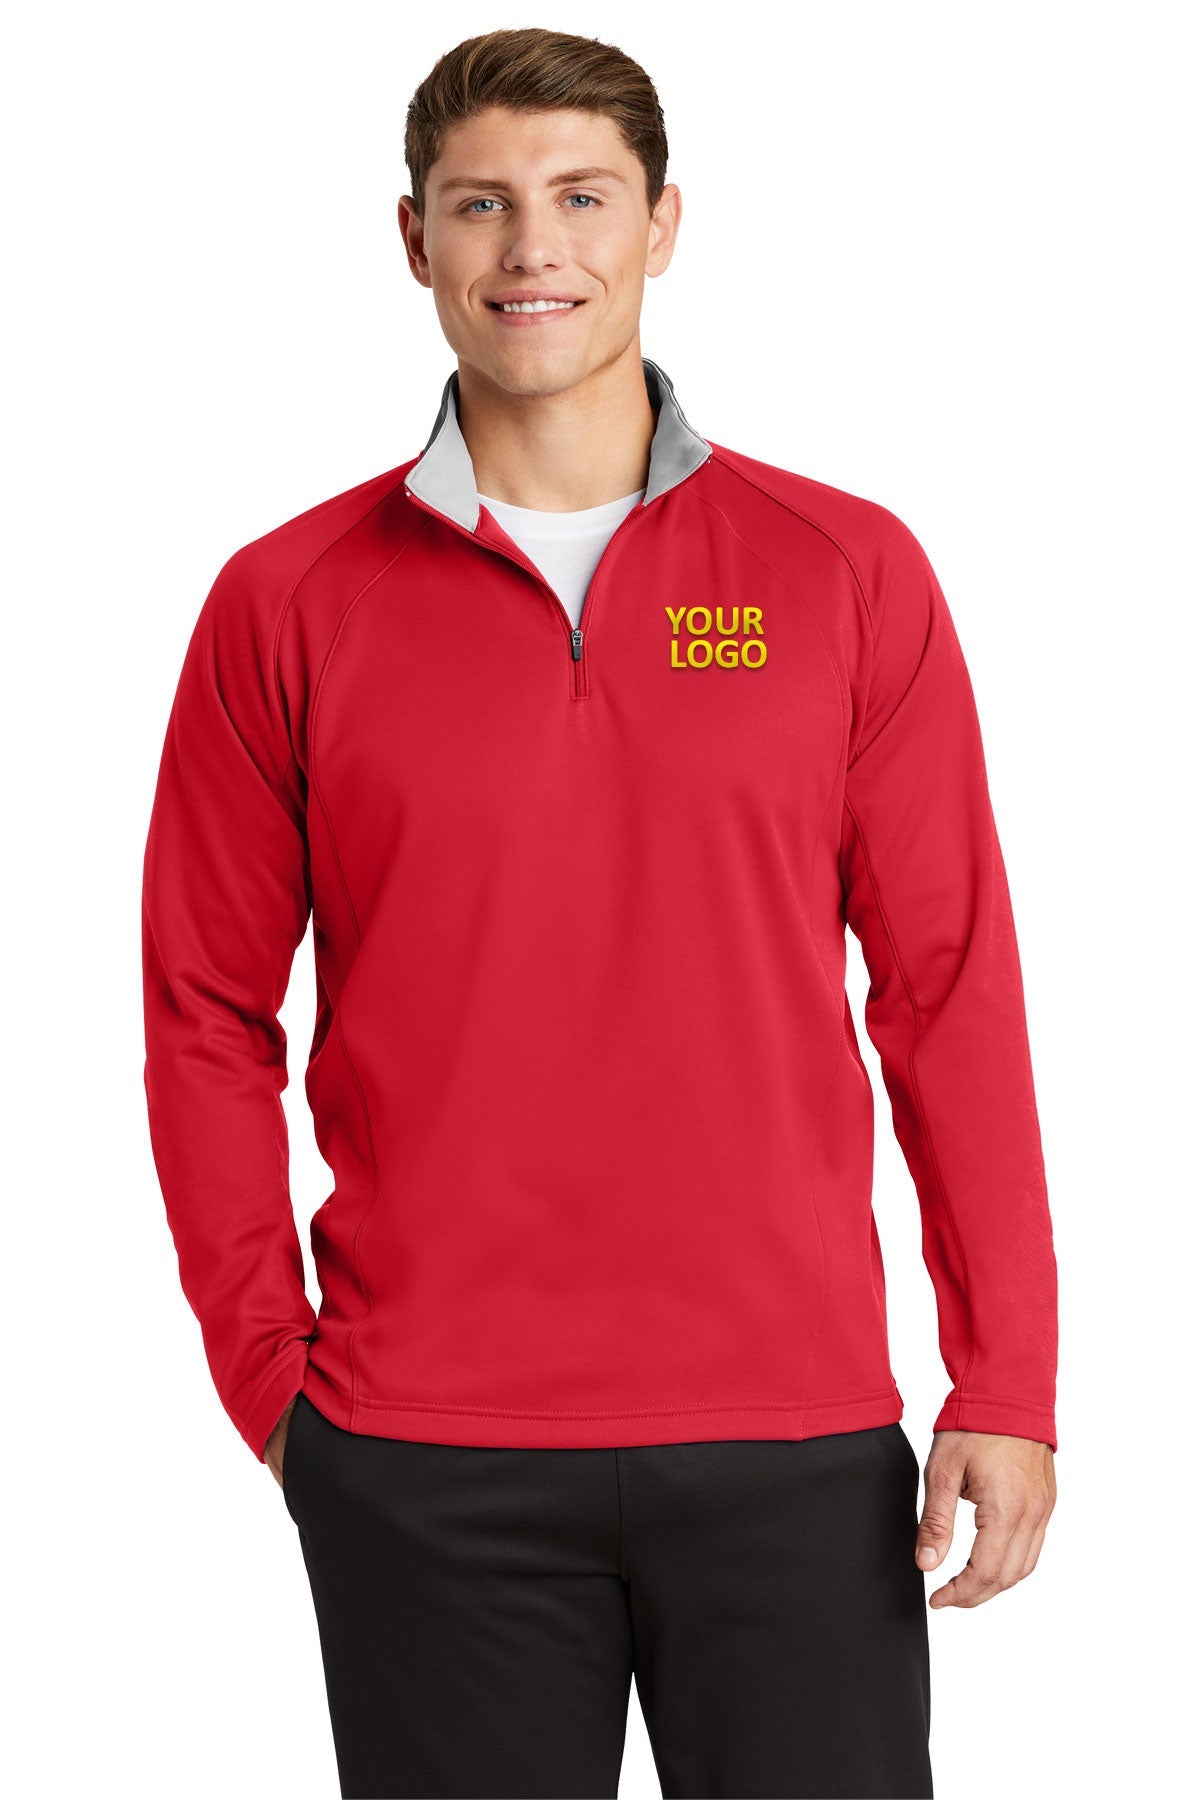 Sport-Tek Deep Red/ Silver F243 sweatshirts with logos